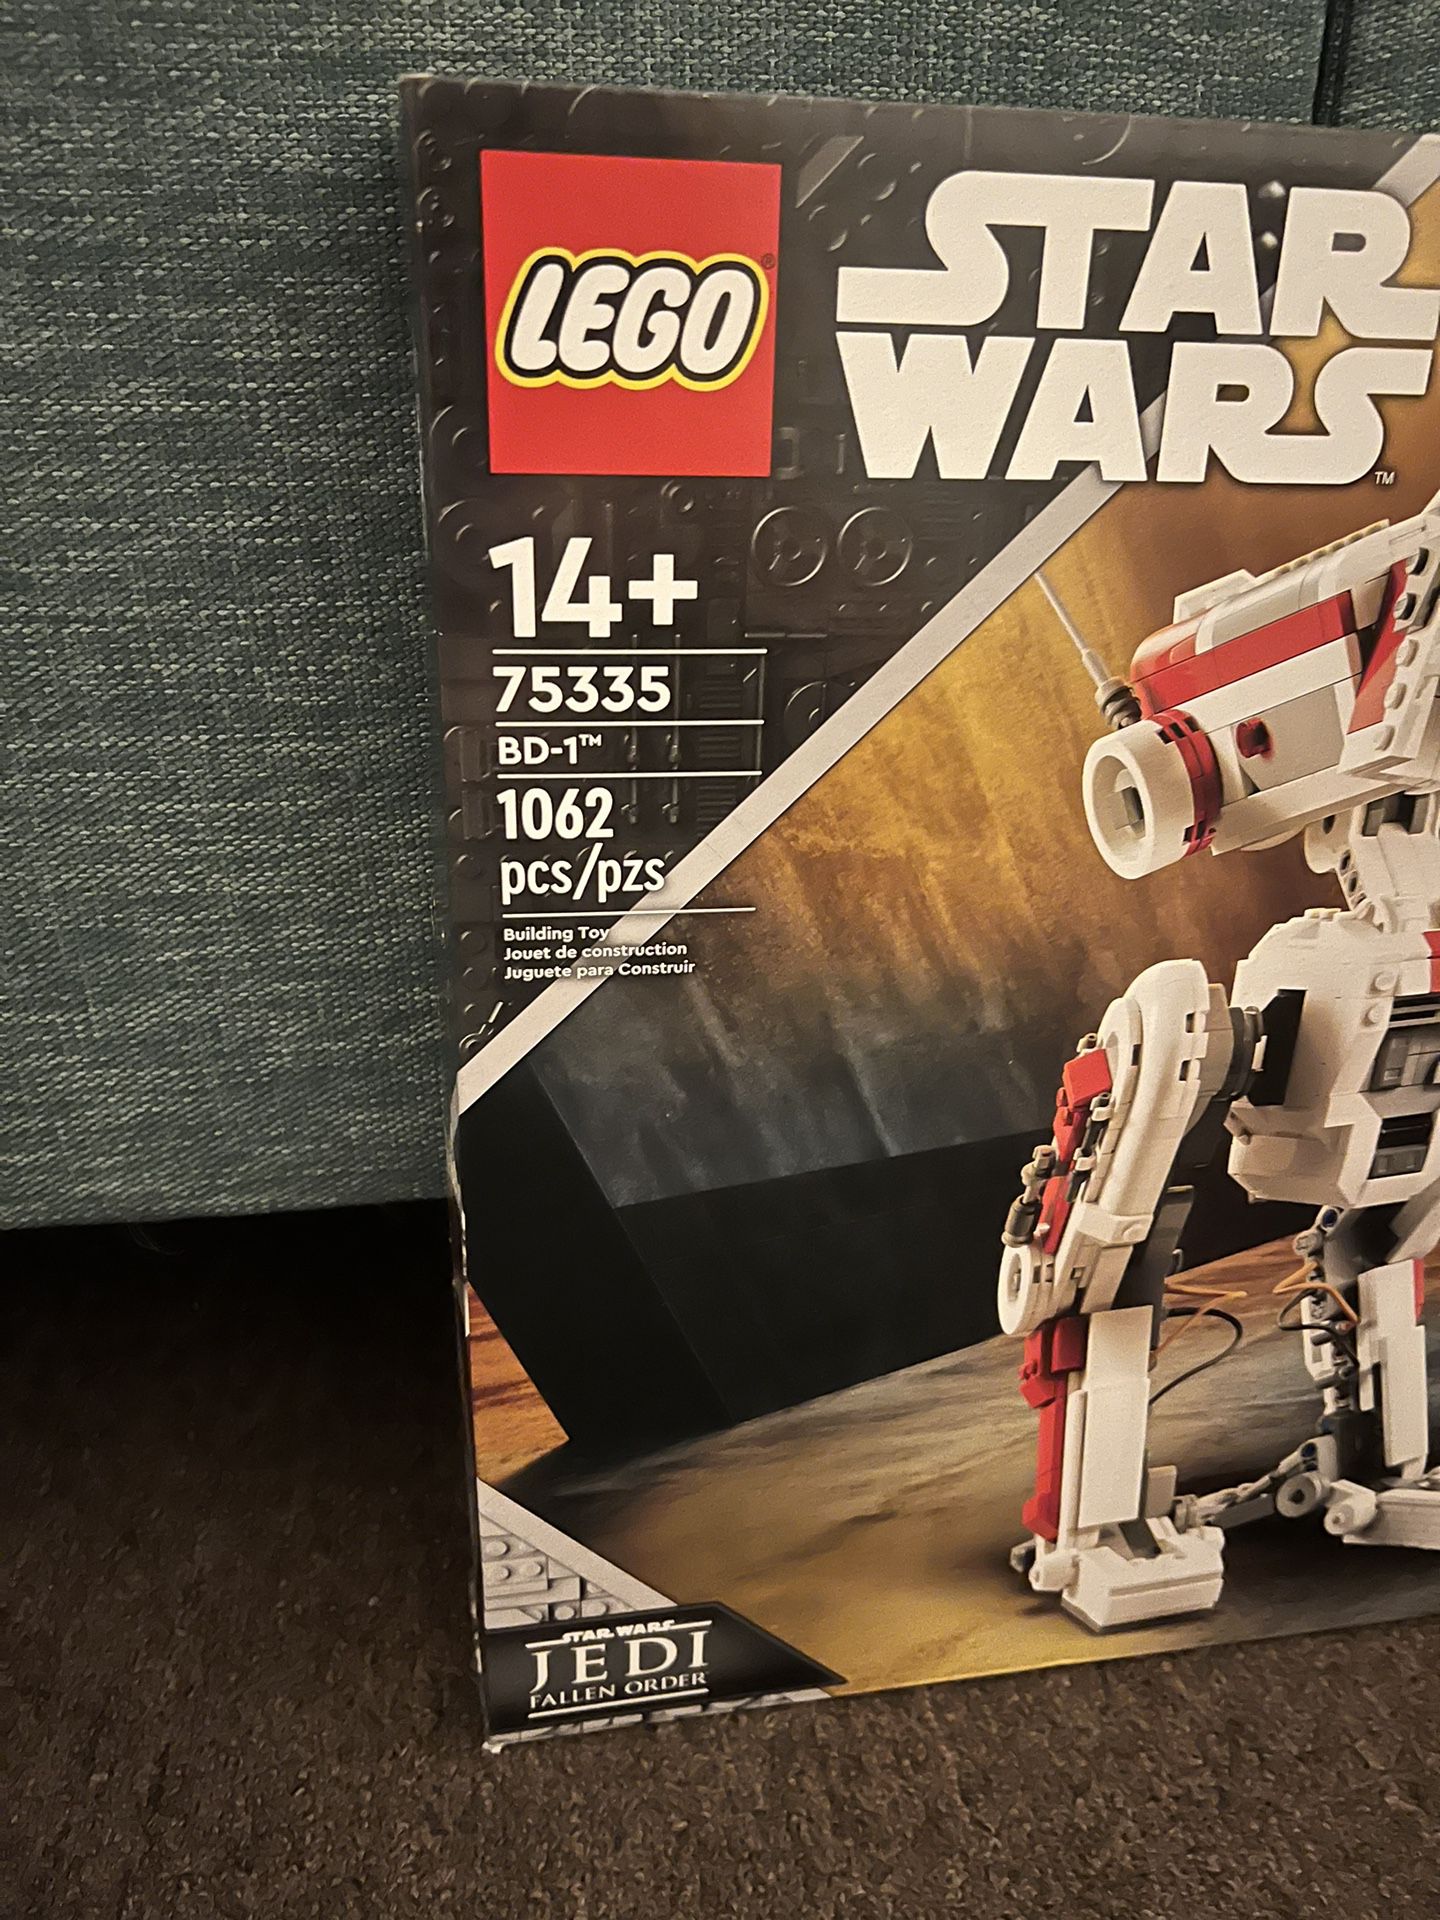 LEGO Star Wars 75335 BD-1 Droid Brand New